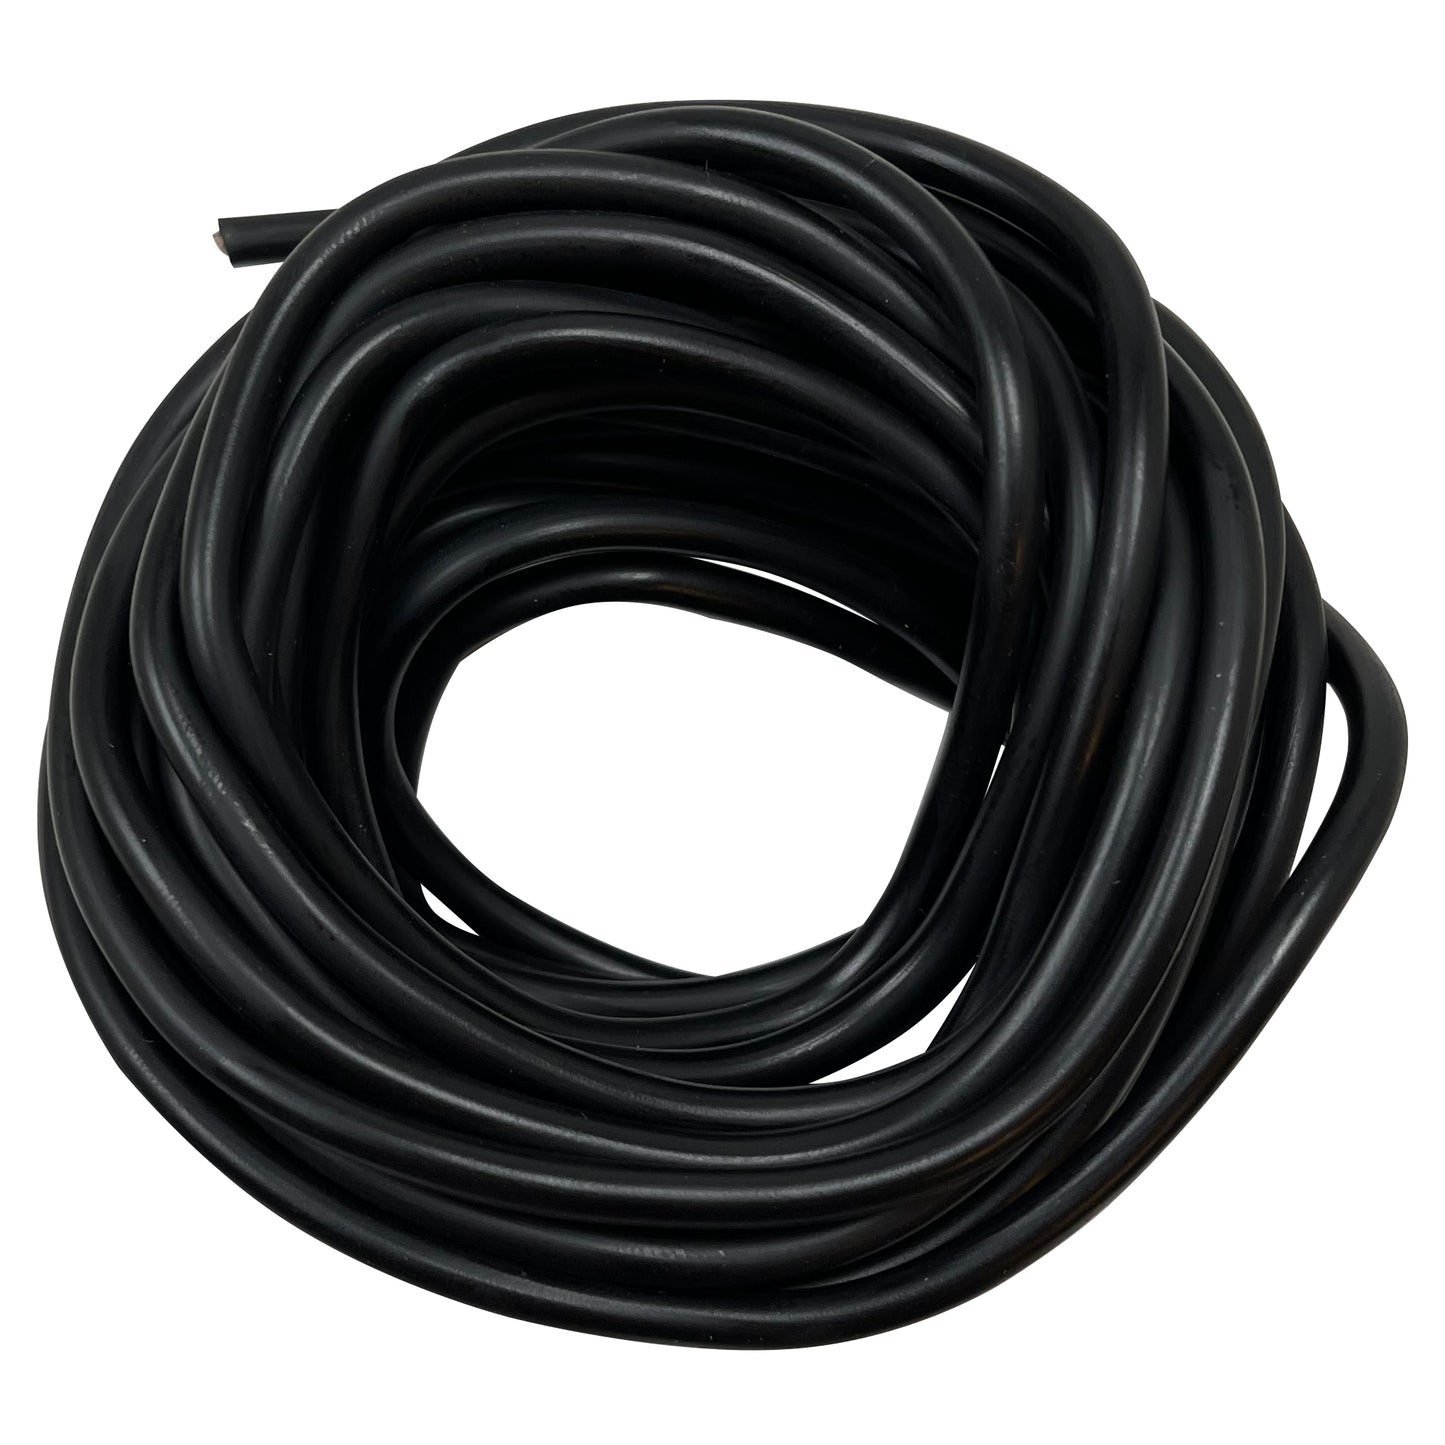 10 Gauge Universal Automotive Fusible Link Wire - 10 FEET